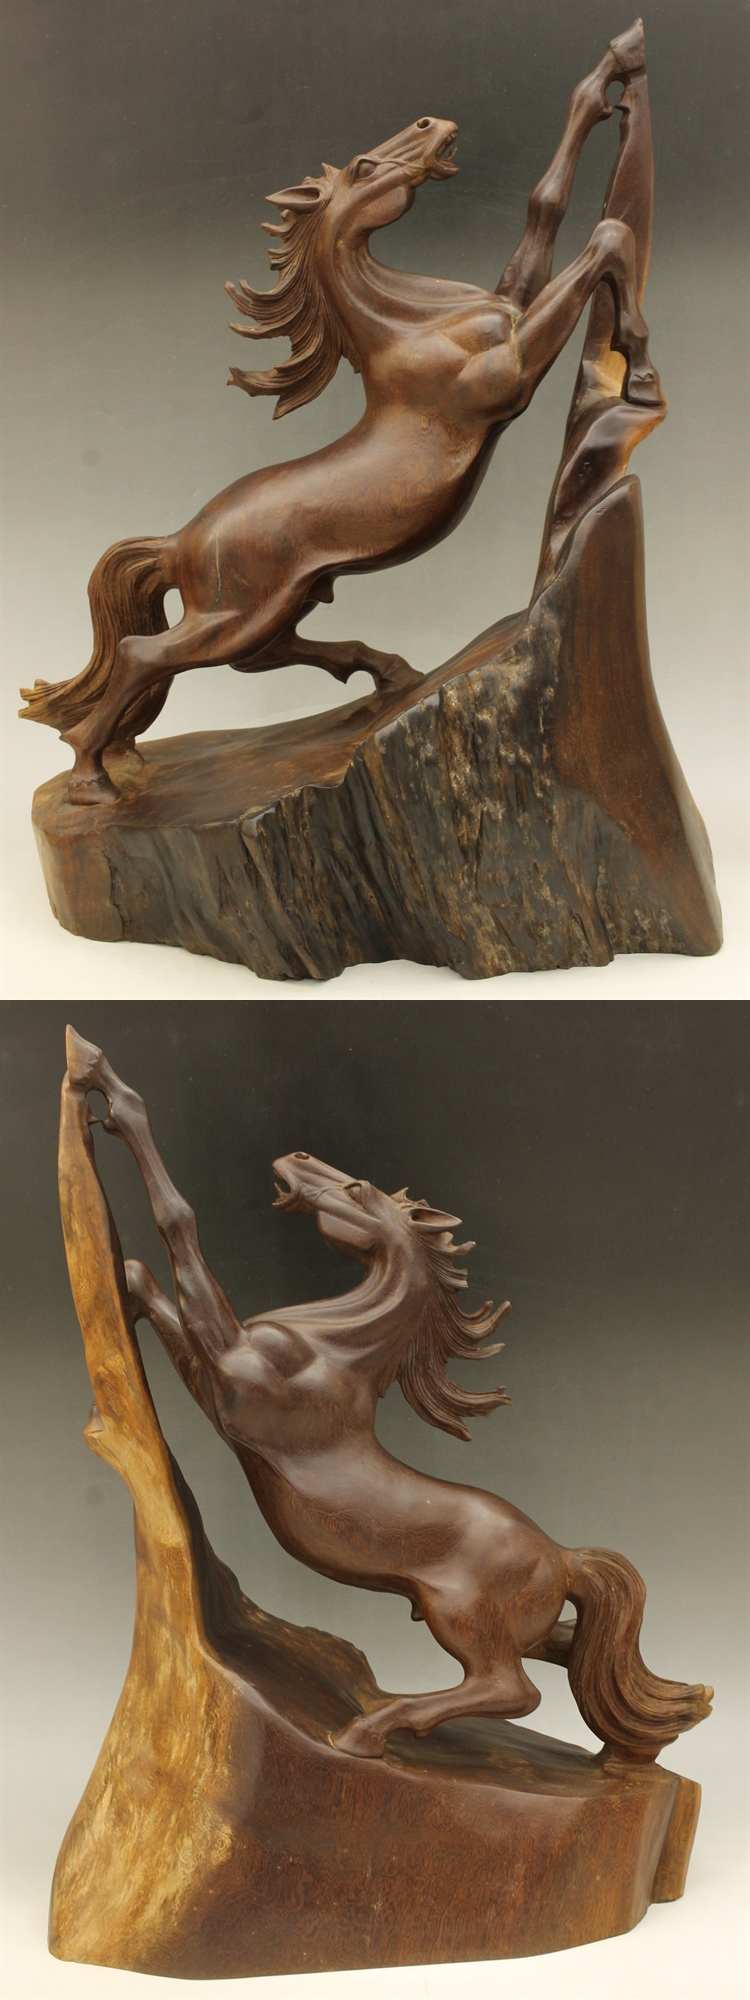 dd04-8256[TOM] 山本雅彦 ブロンズ 彫刻「浴後」共箱 裸婦 女性 銅像 